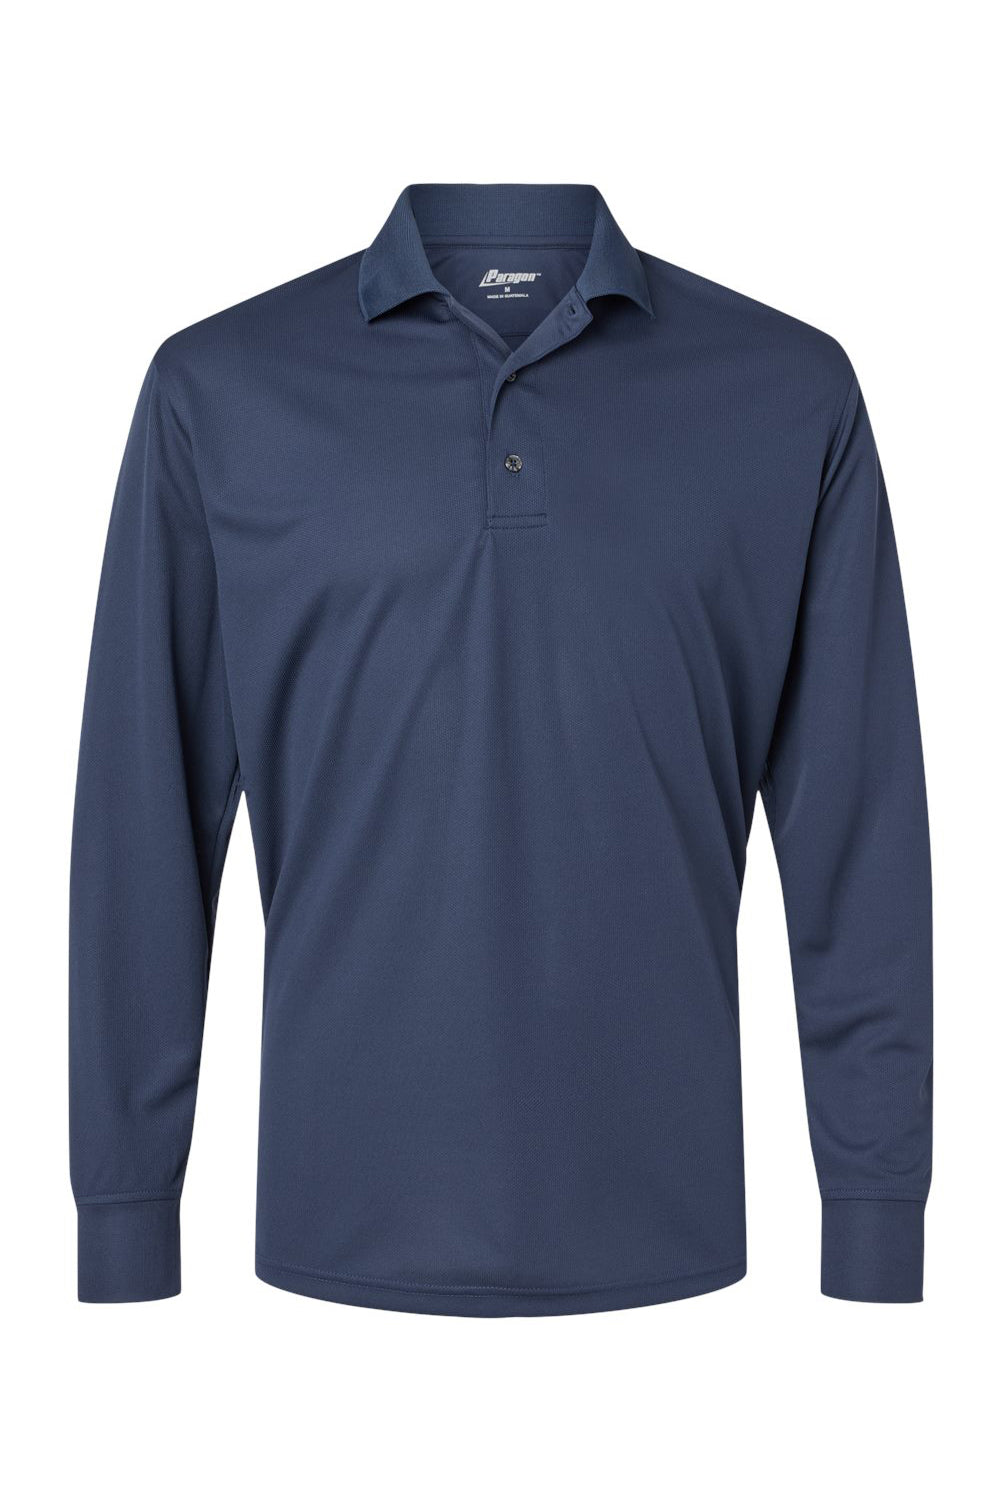 Paragon 110 Mens Prescott Long Sleeve Polo Shirt Navy Blue Flat Front